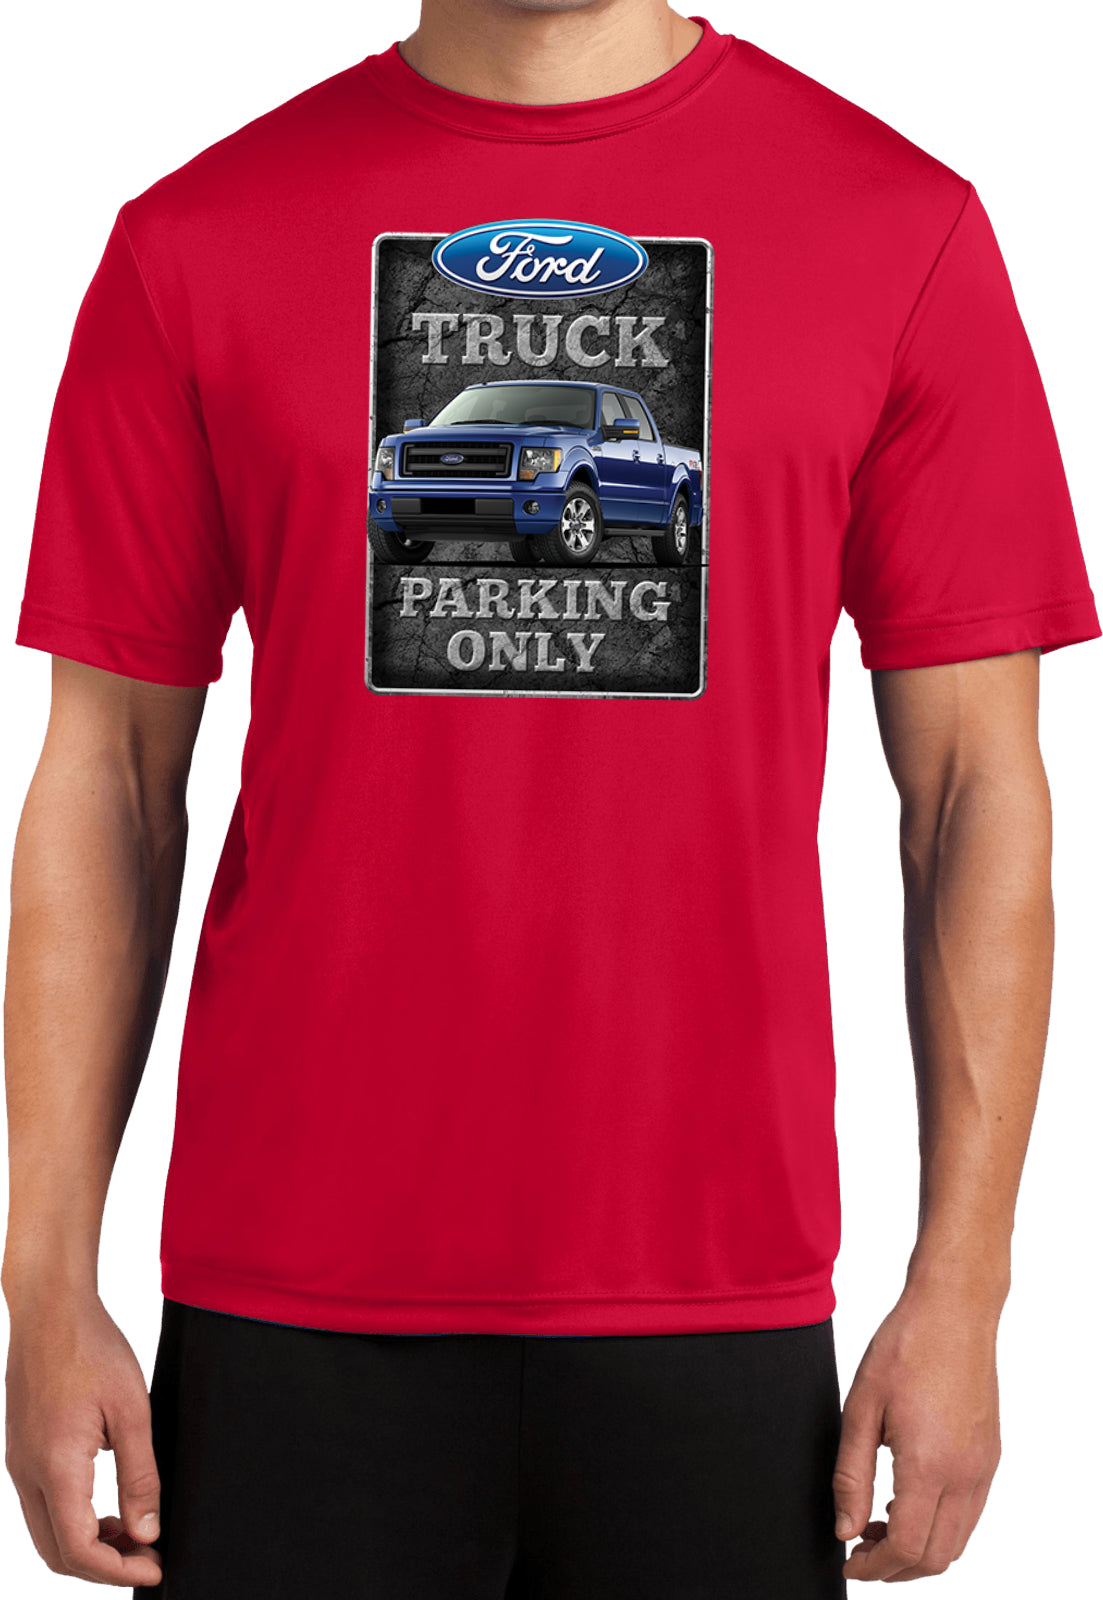 Ford Truck T-shirt Parking Sign Moisture Wicking Tee